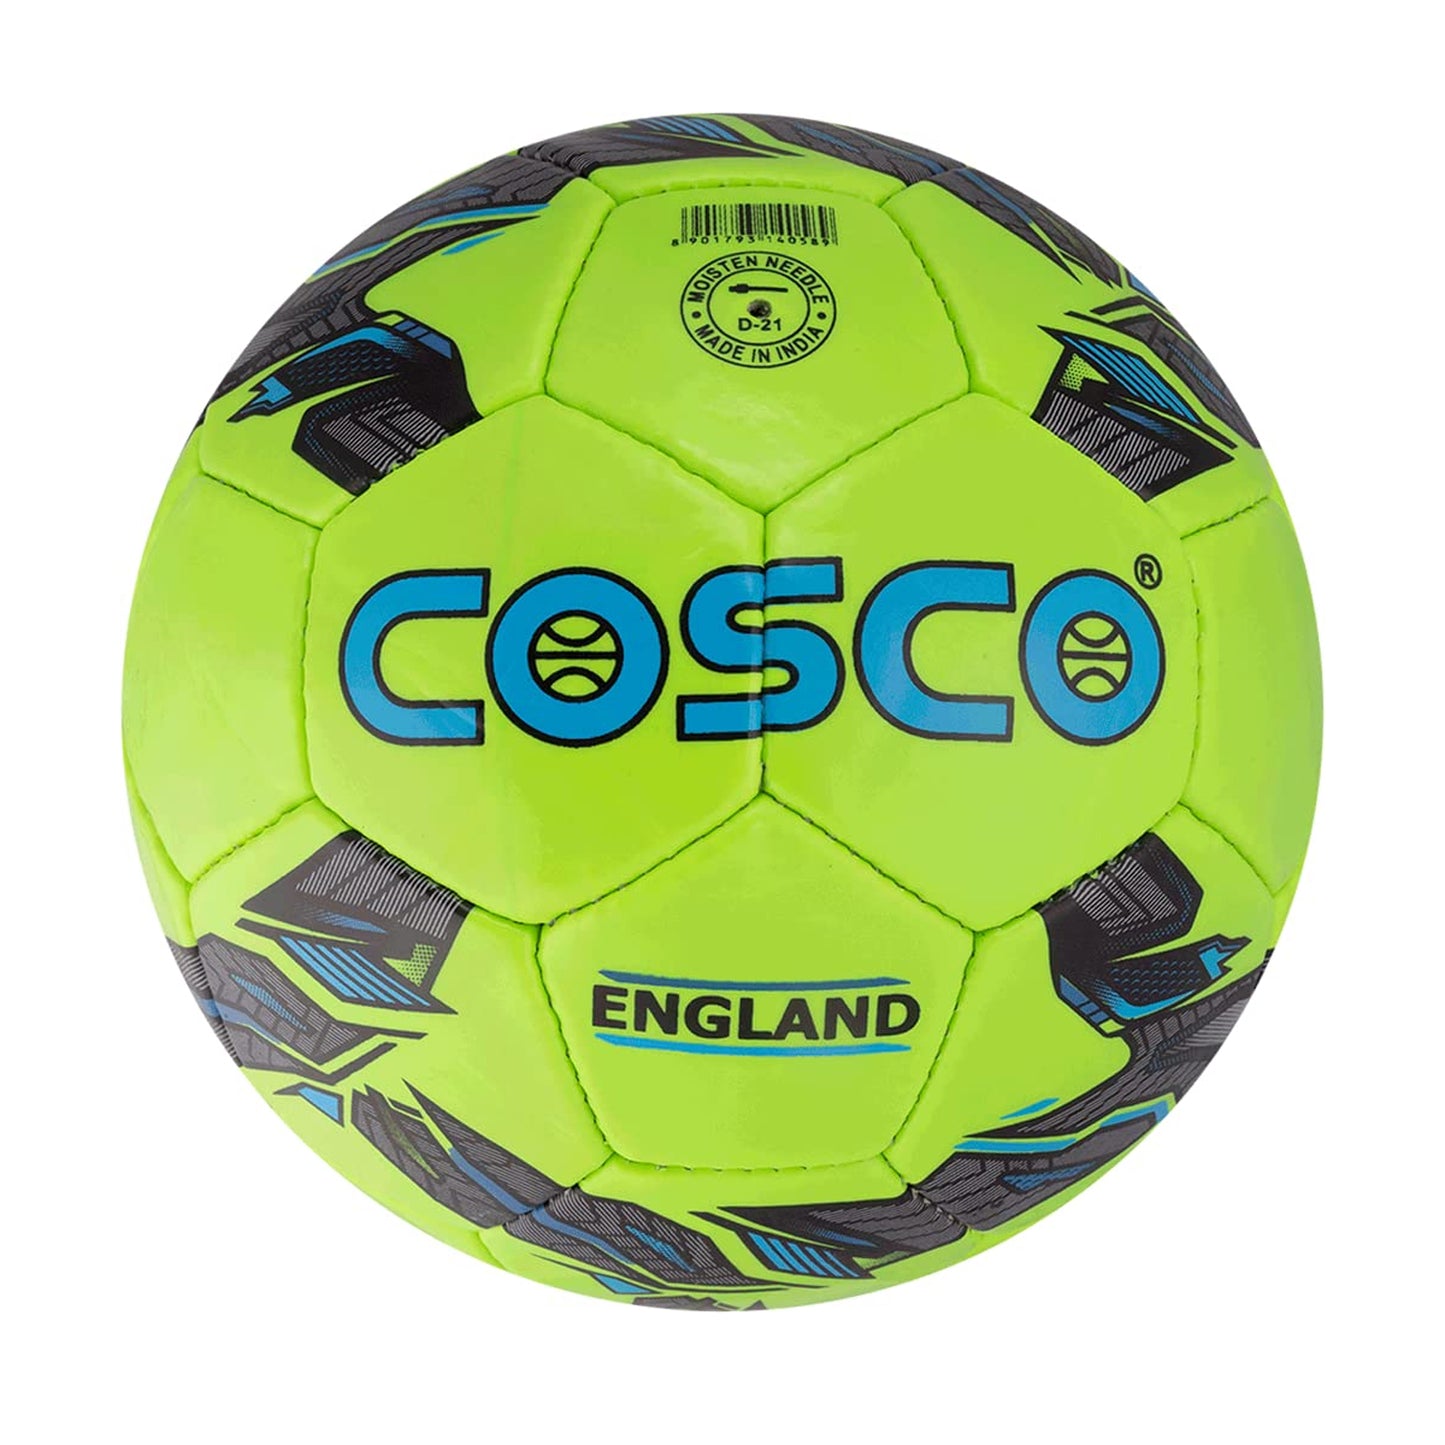 Cosco England Football, Green/Black (Size 5) - Best Price online Prokicksports.com